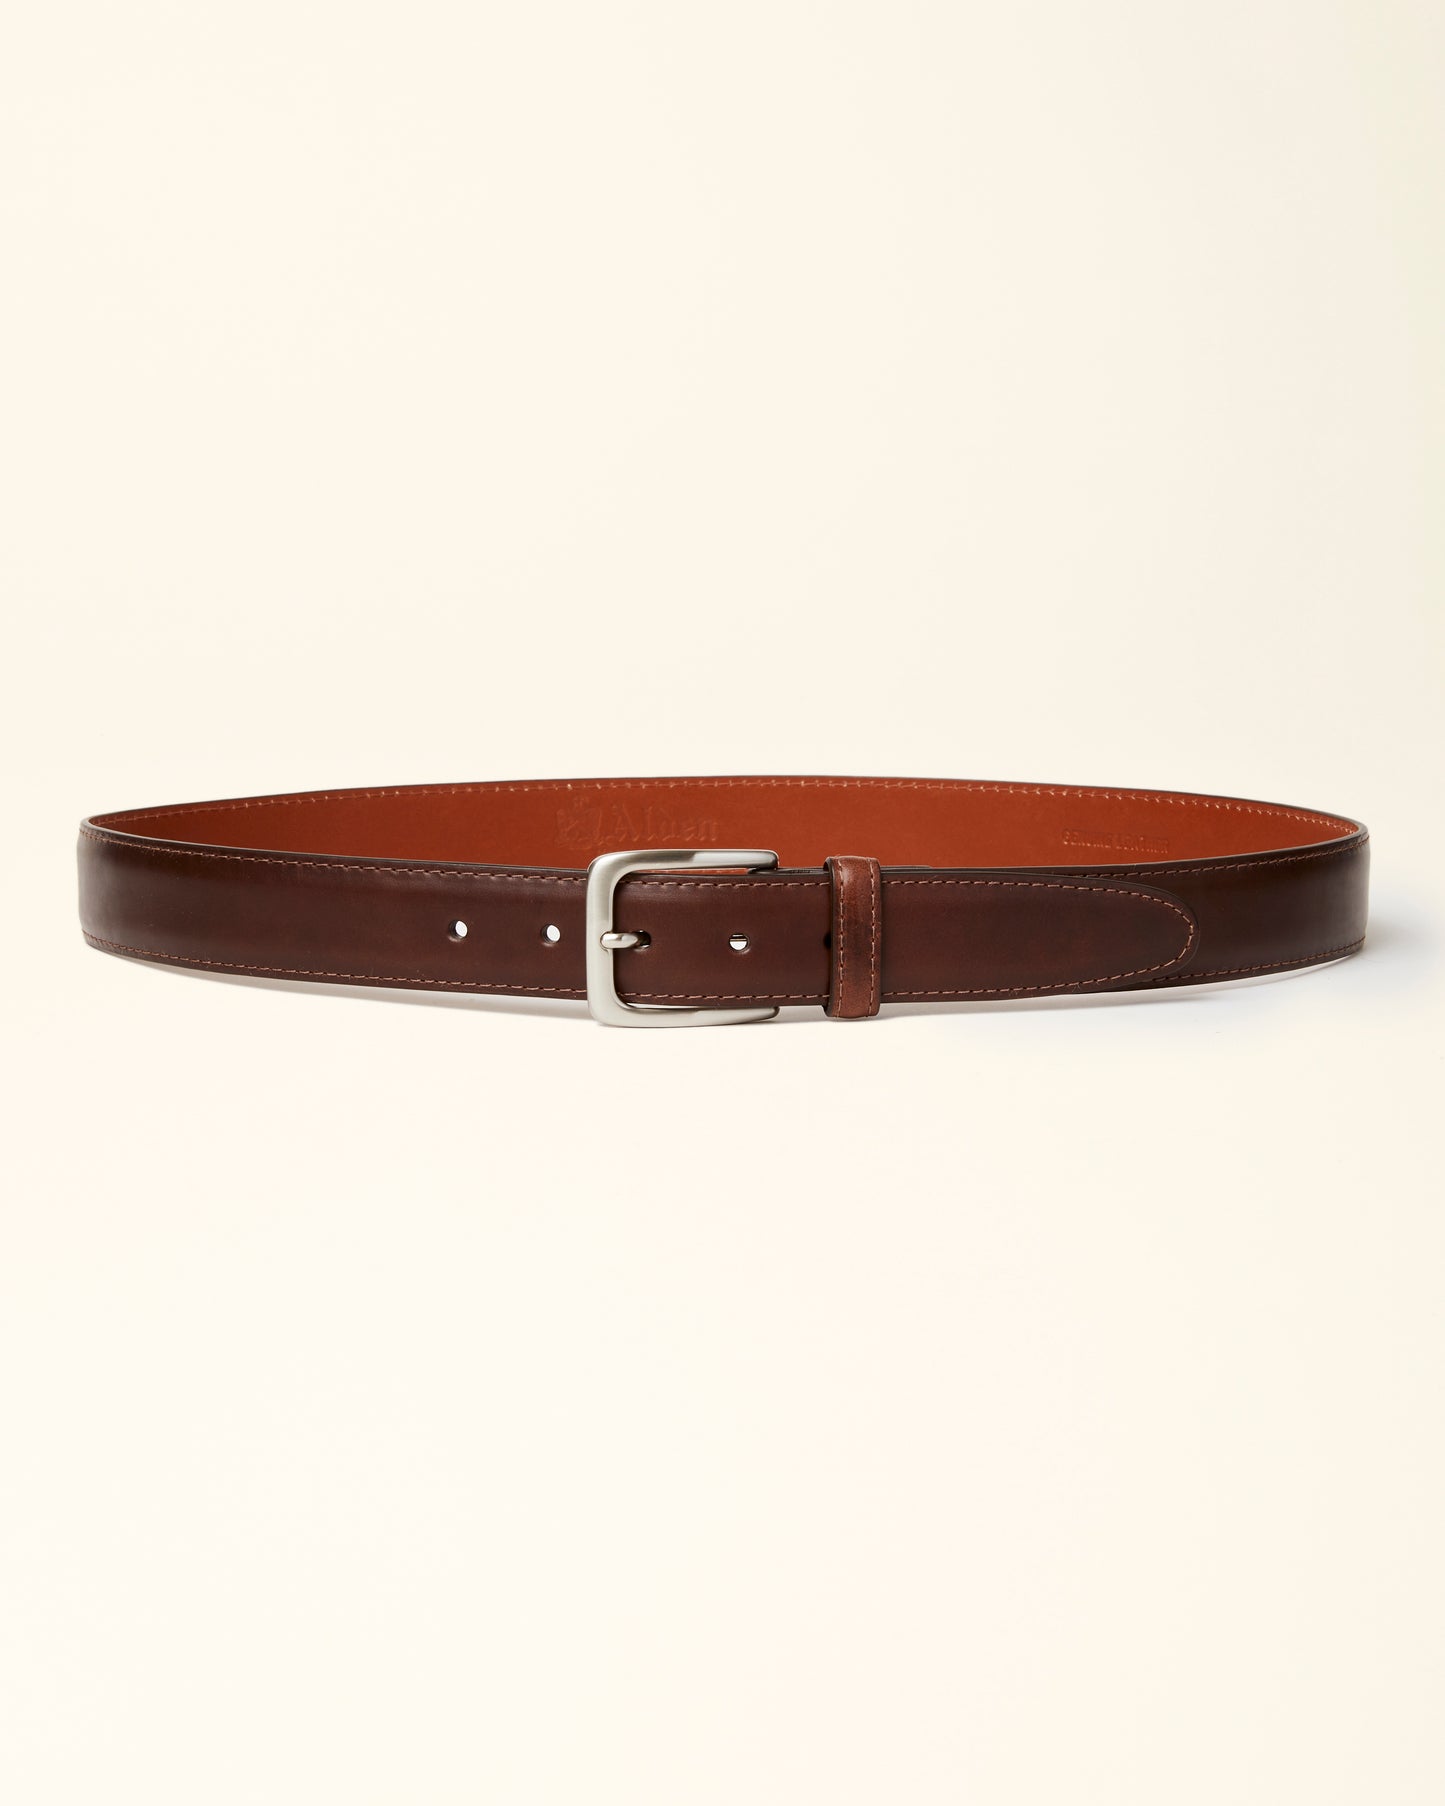 MB 5335 Brown Chromexcel Belt 35mm